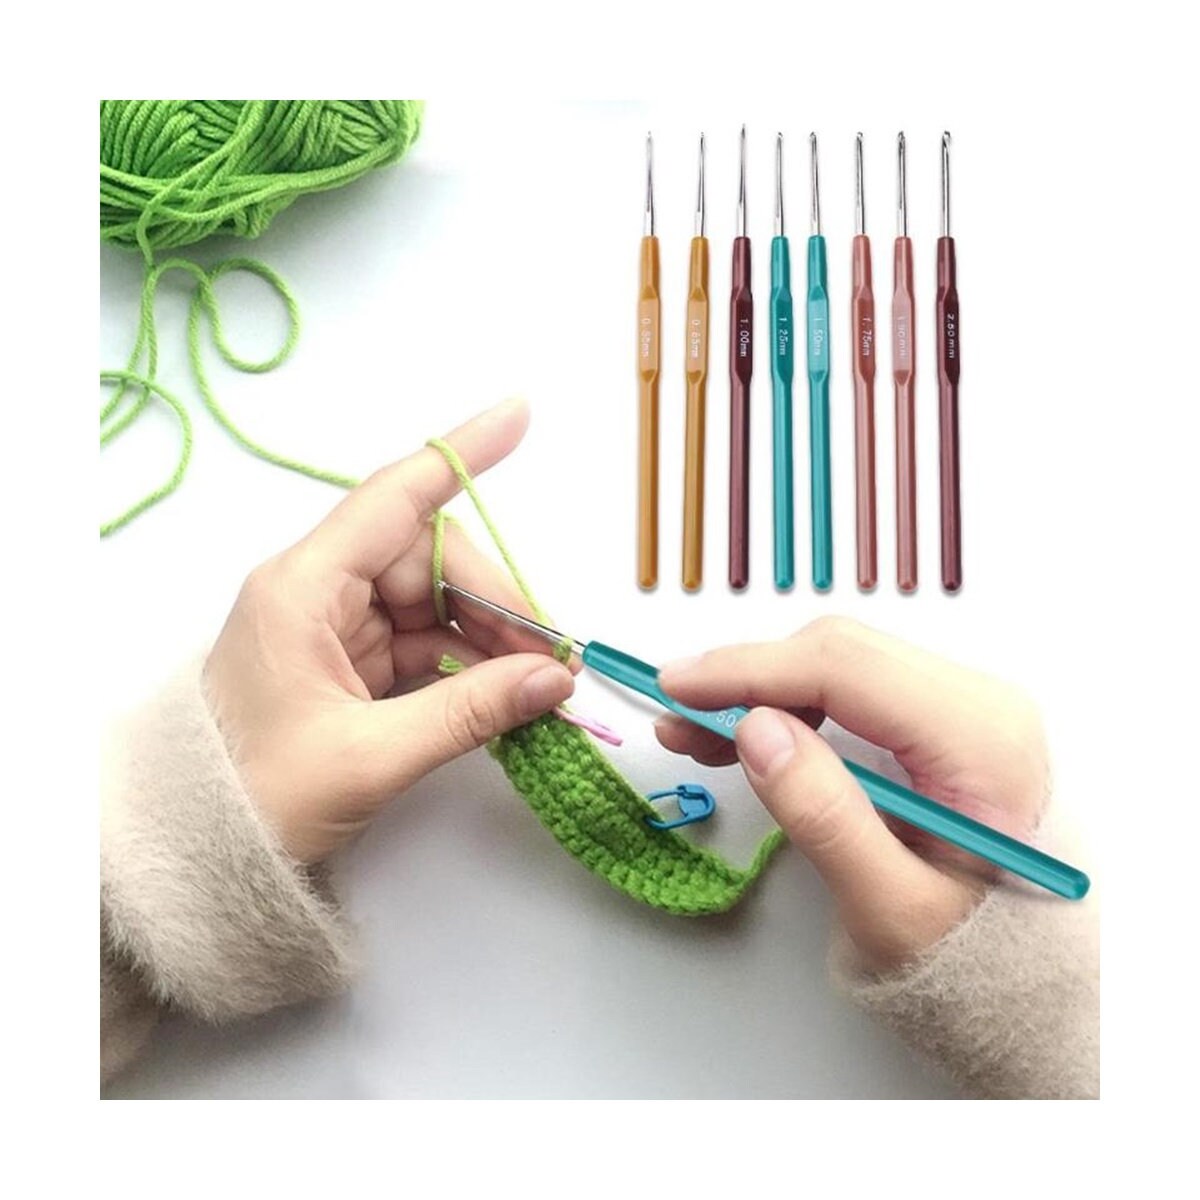 10 Small Sizes Crochet Hooks Set, Lace Crochet Hooks 0.5mm - 2.75mm Ergonomic Soft Grip Handle Crochet Hook Needles Thread Crochet Hooks Yarn Lace